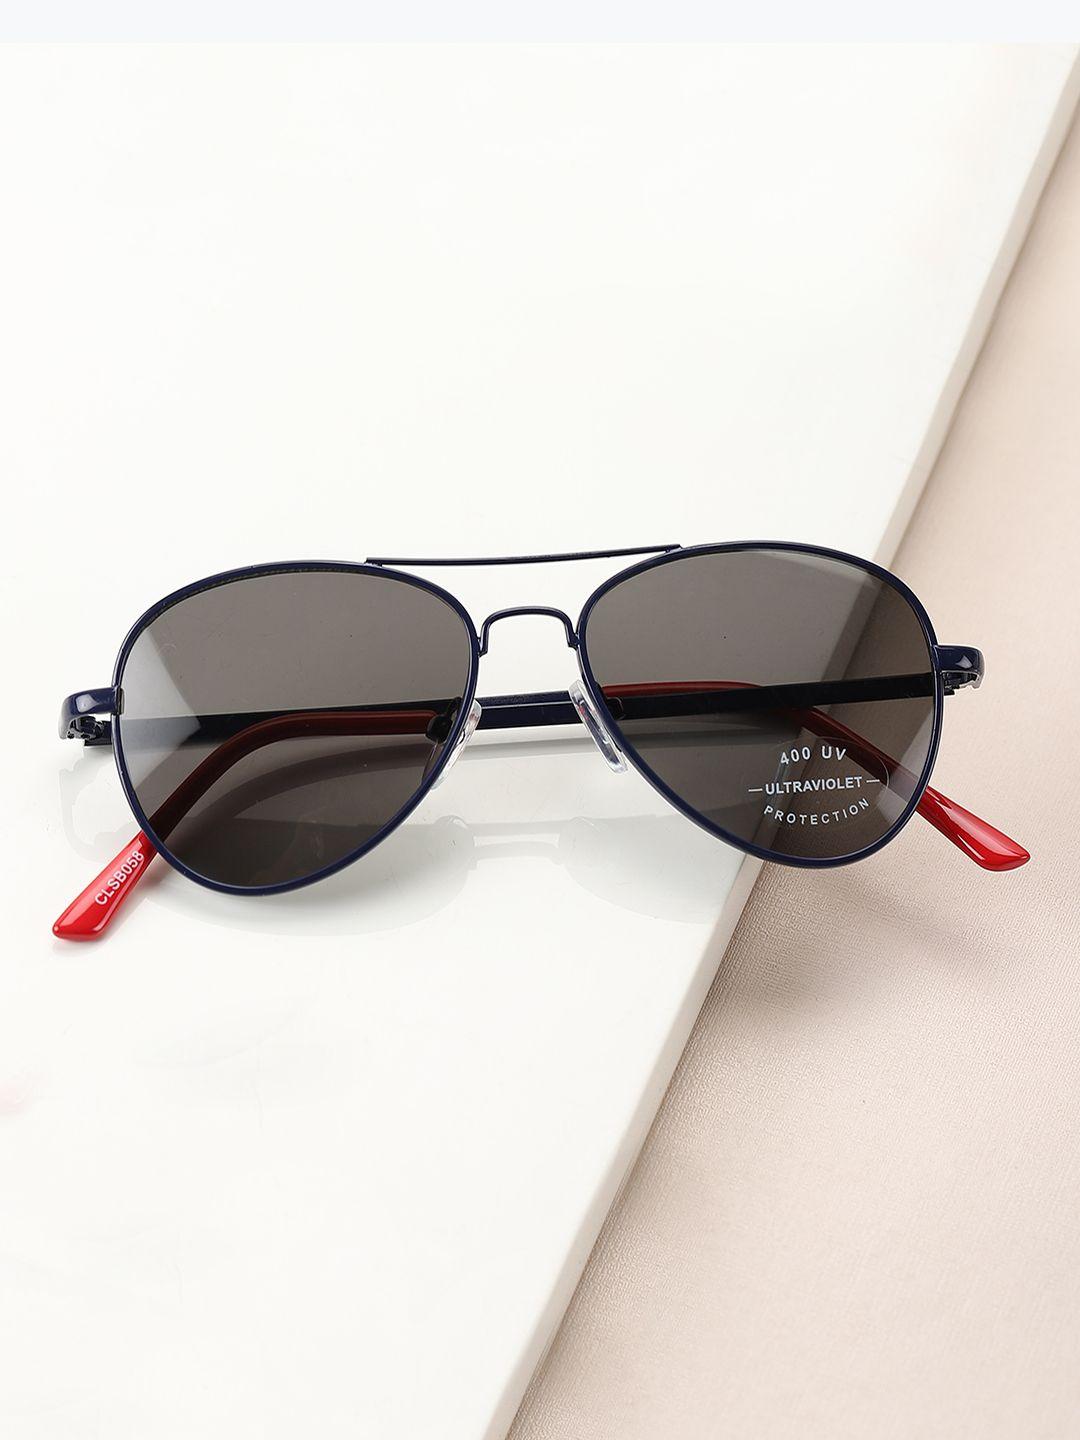 Carlton London Boys Black Lens & Blue Aviator Sunglasses with UV Protected Lens